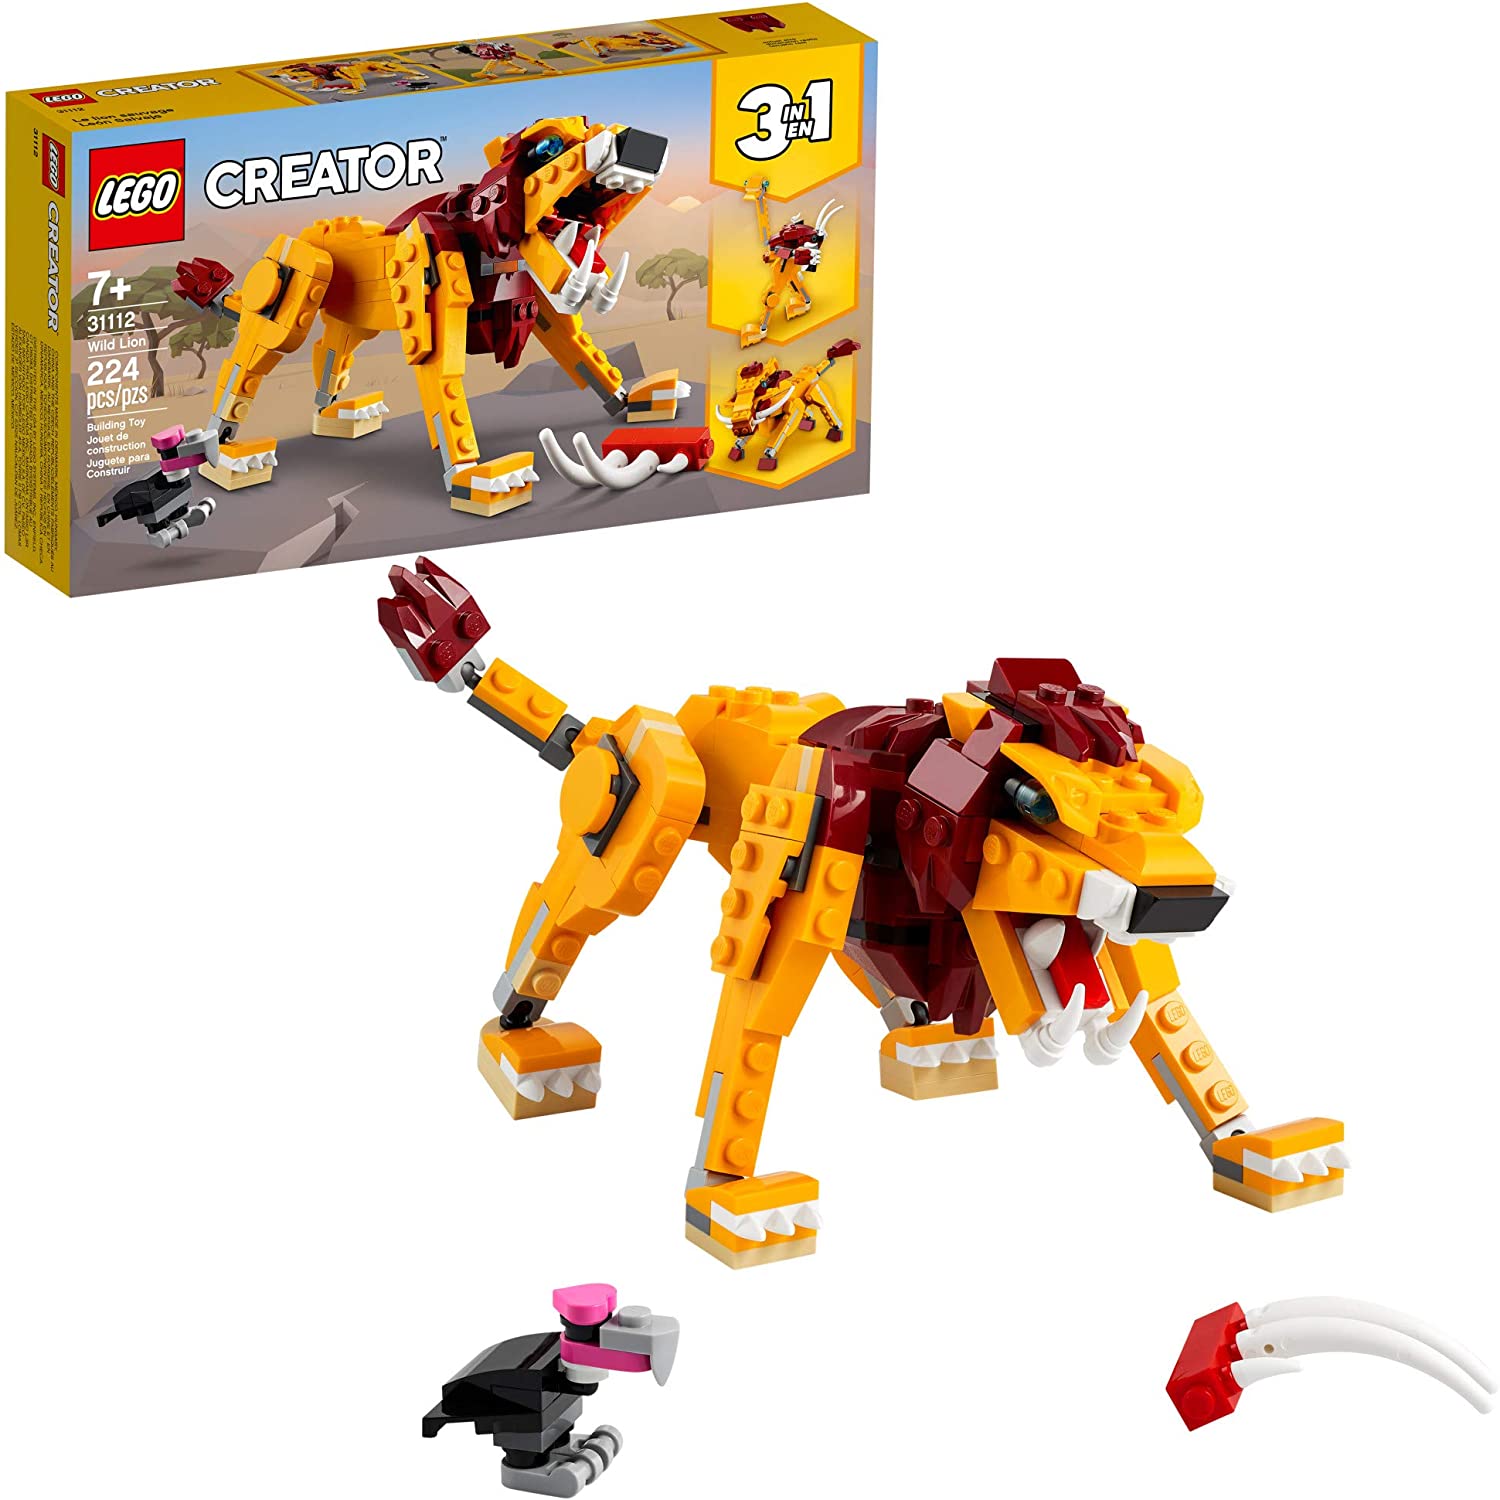 LEGO Creator 3-in-1 Wild Lion Set - 224 Pieces